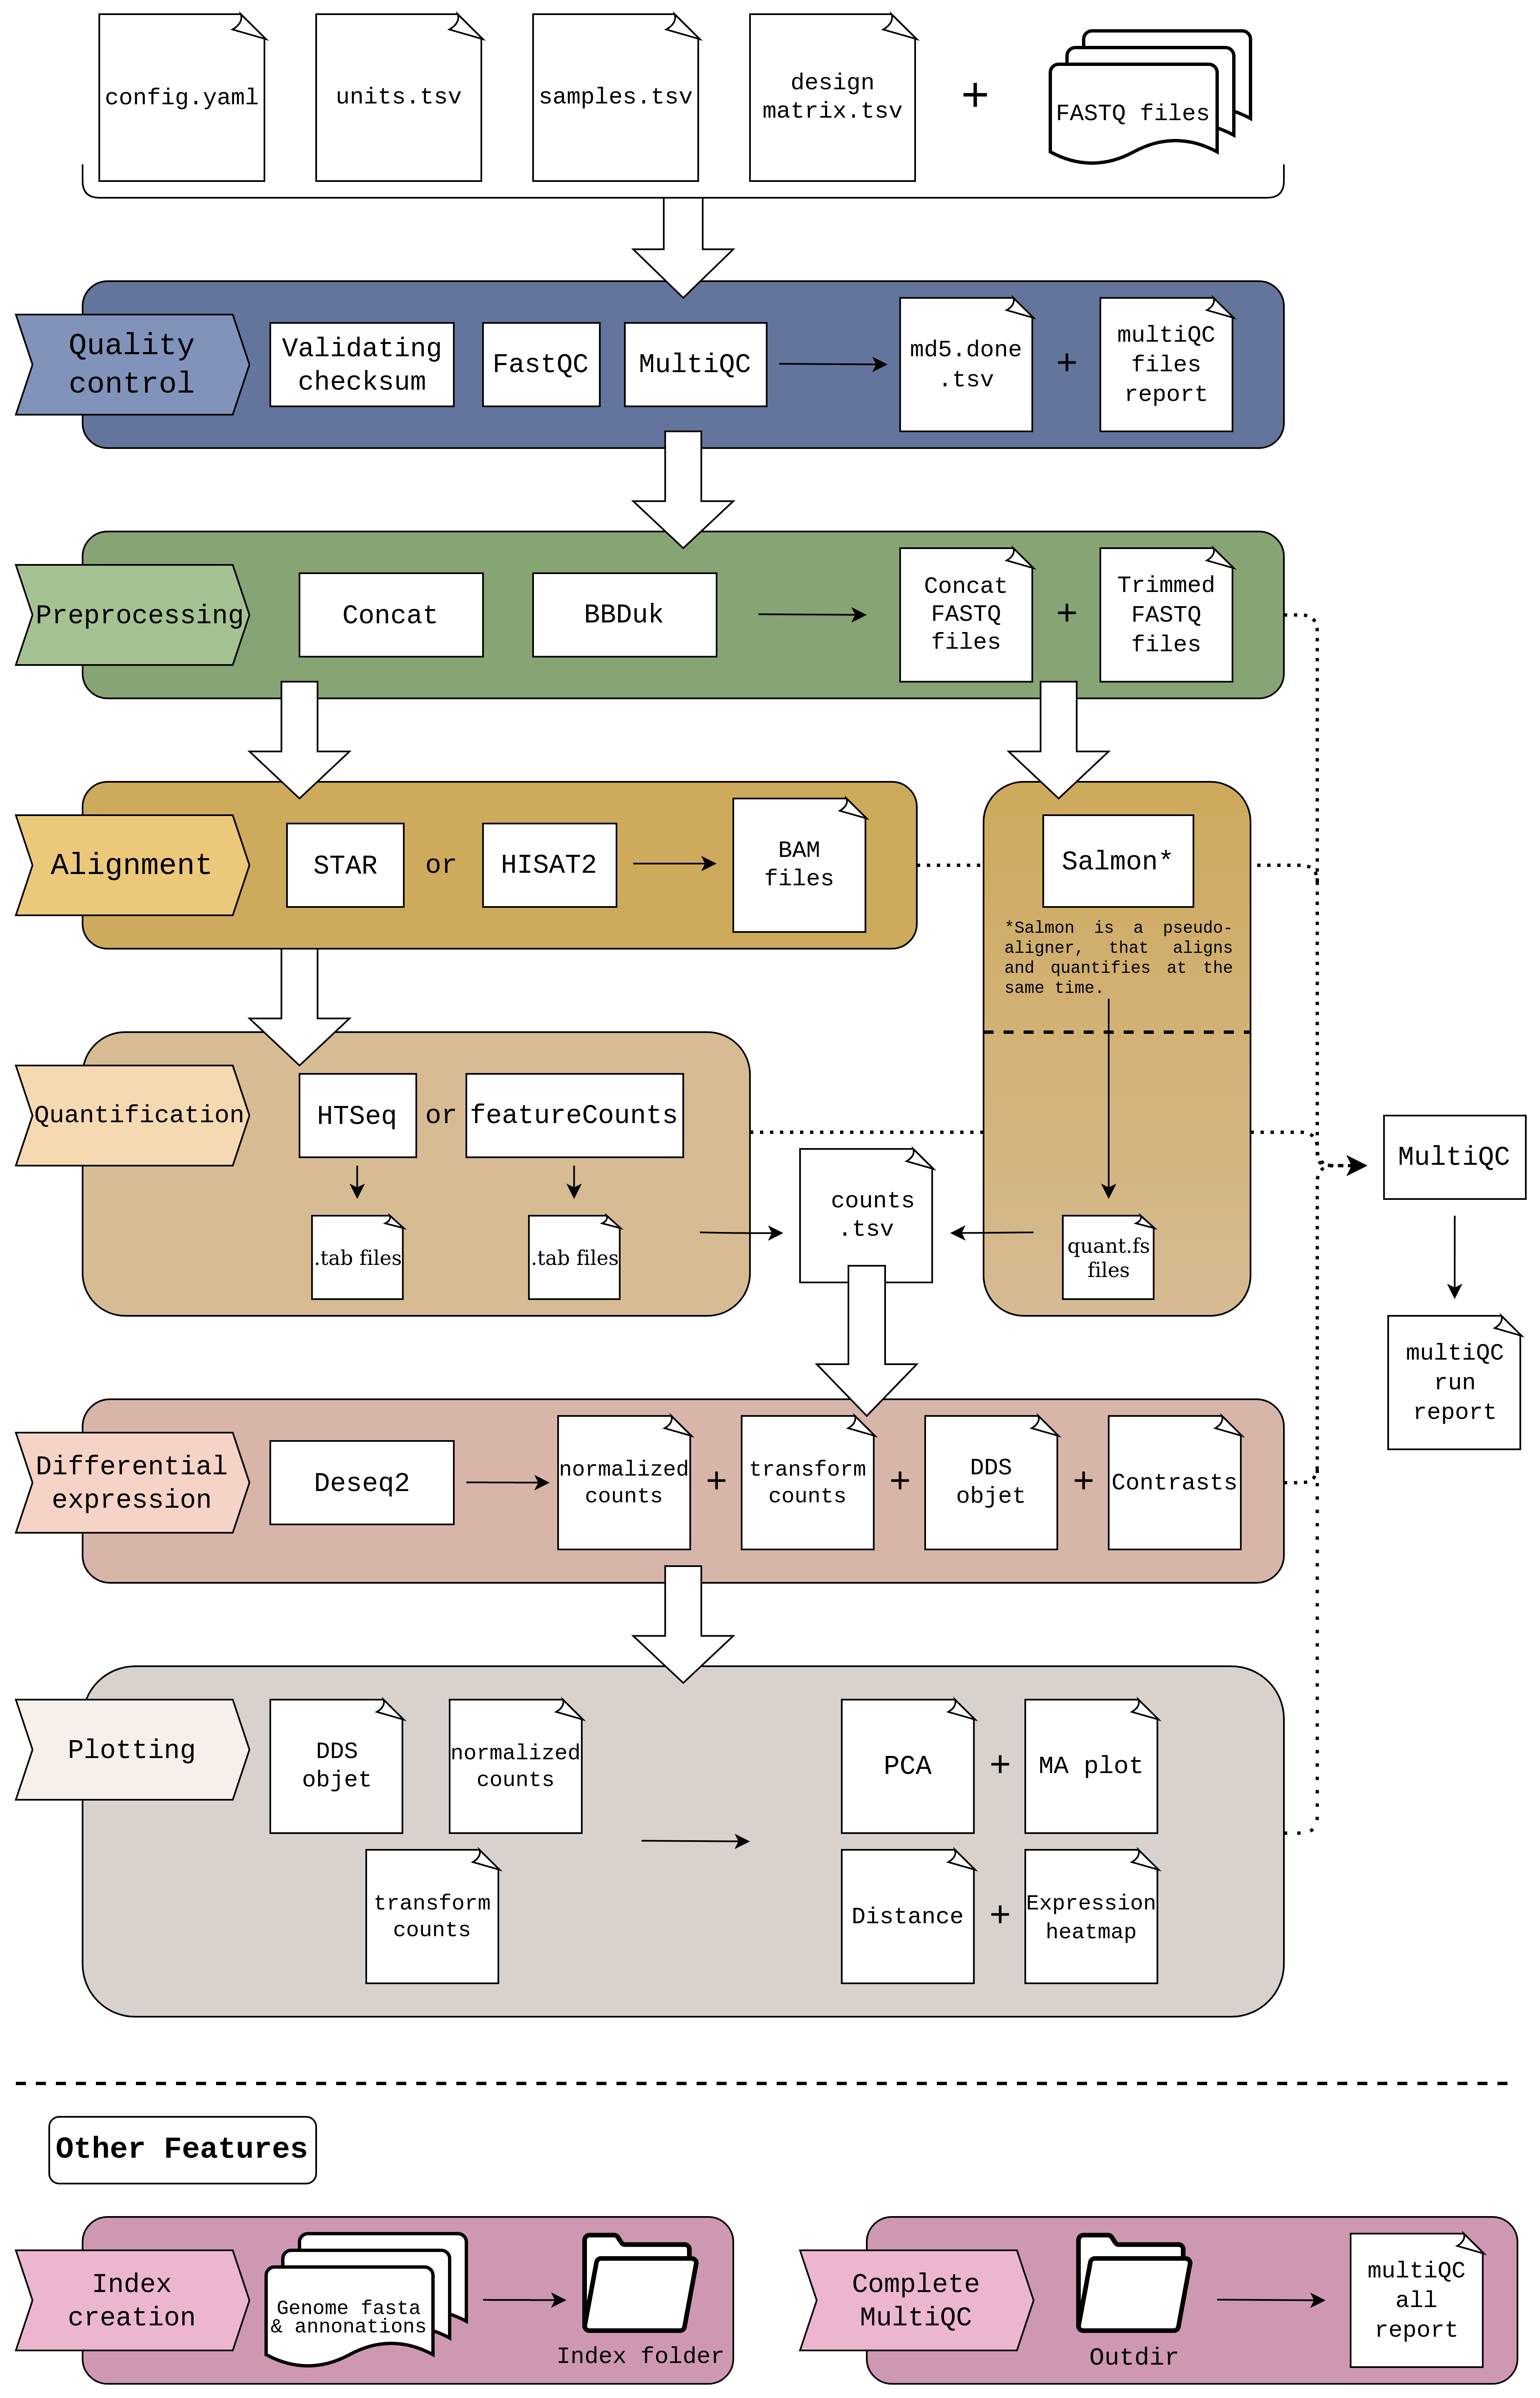 cluster_rnaseq workflow diagram